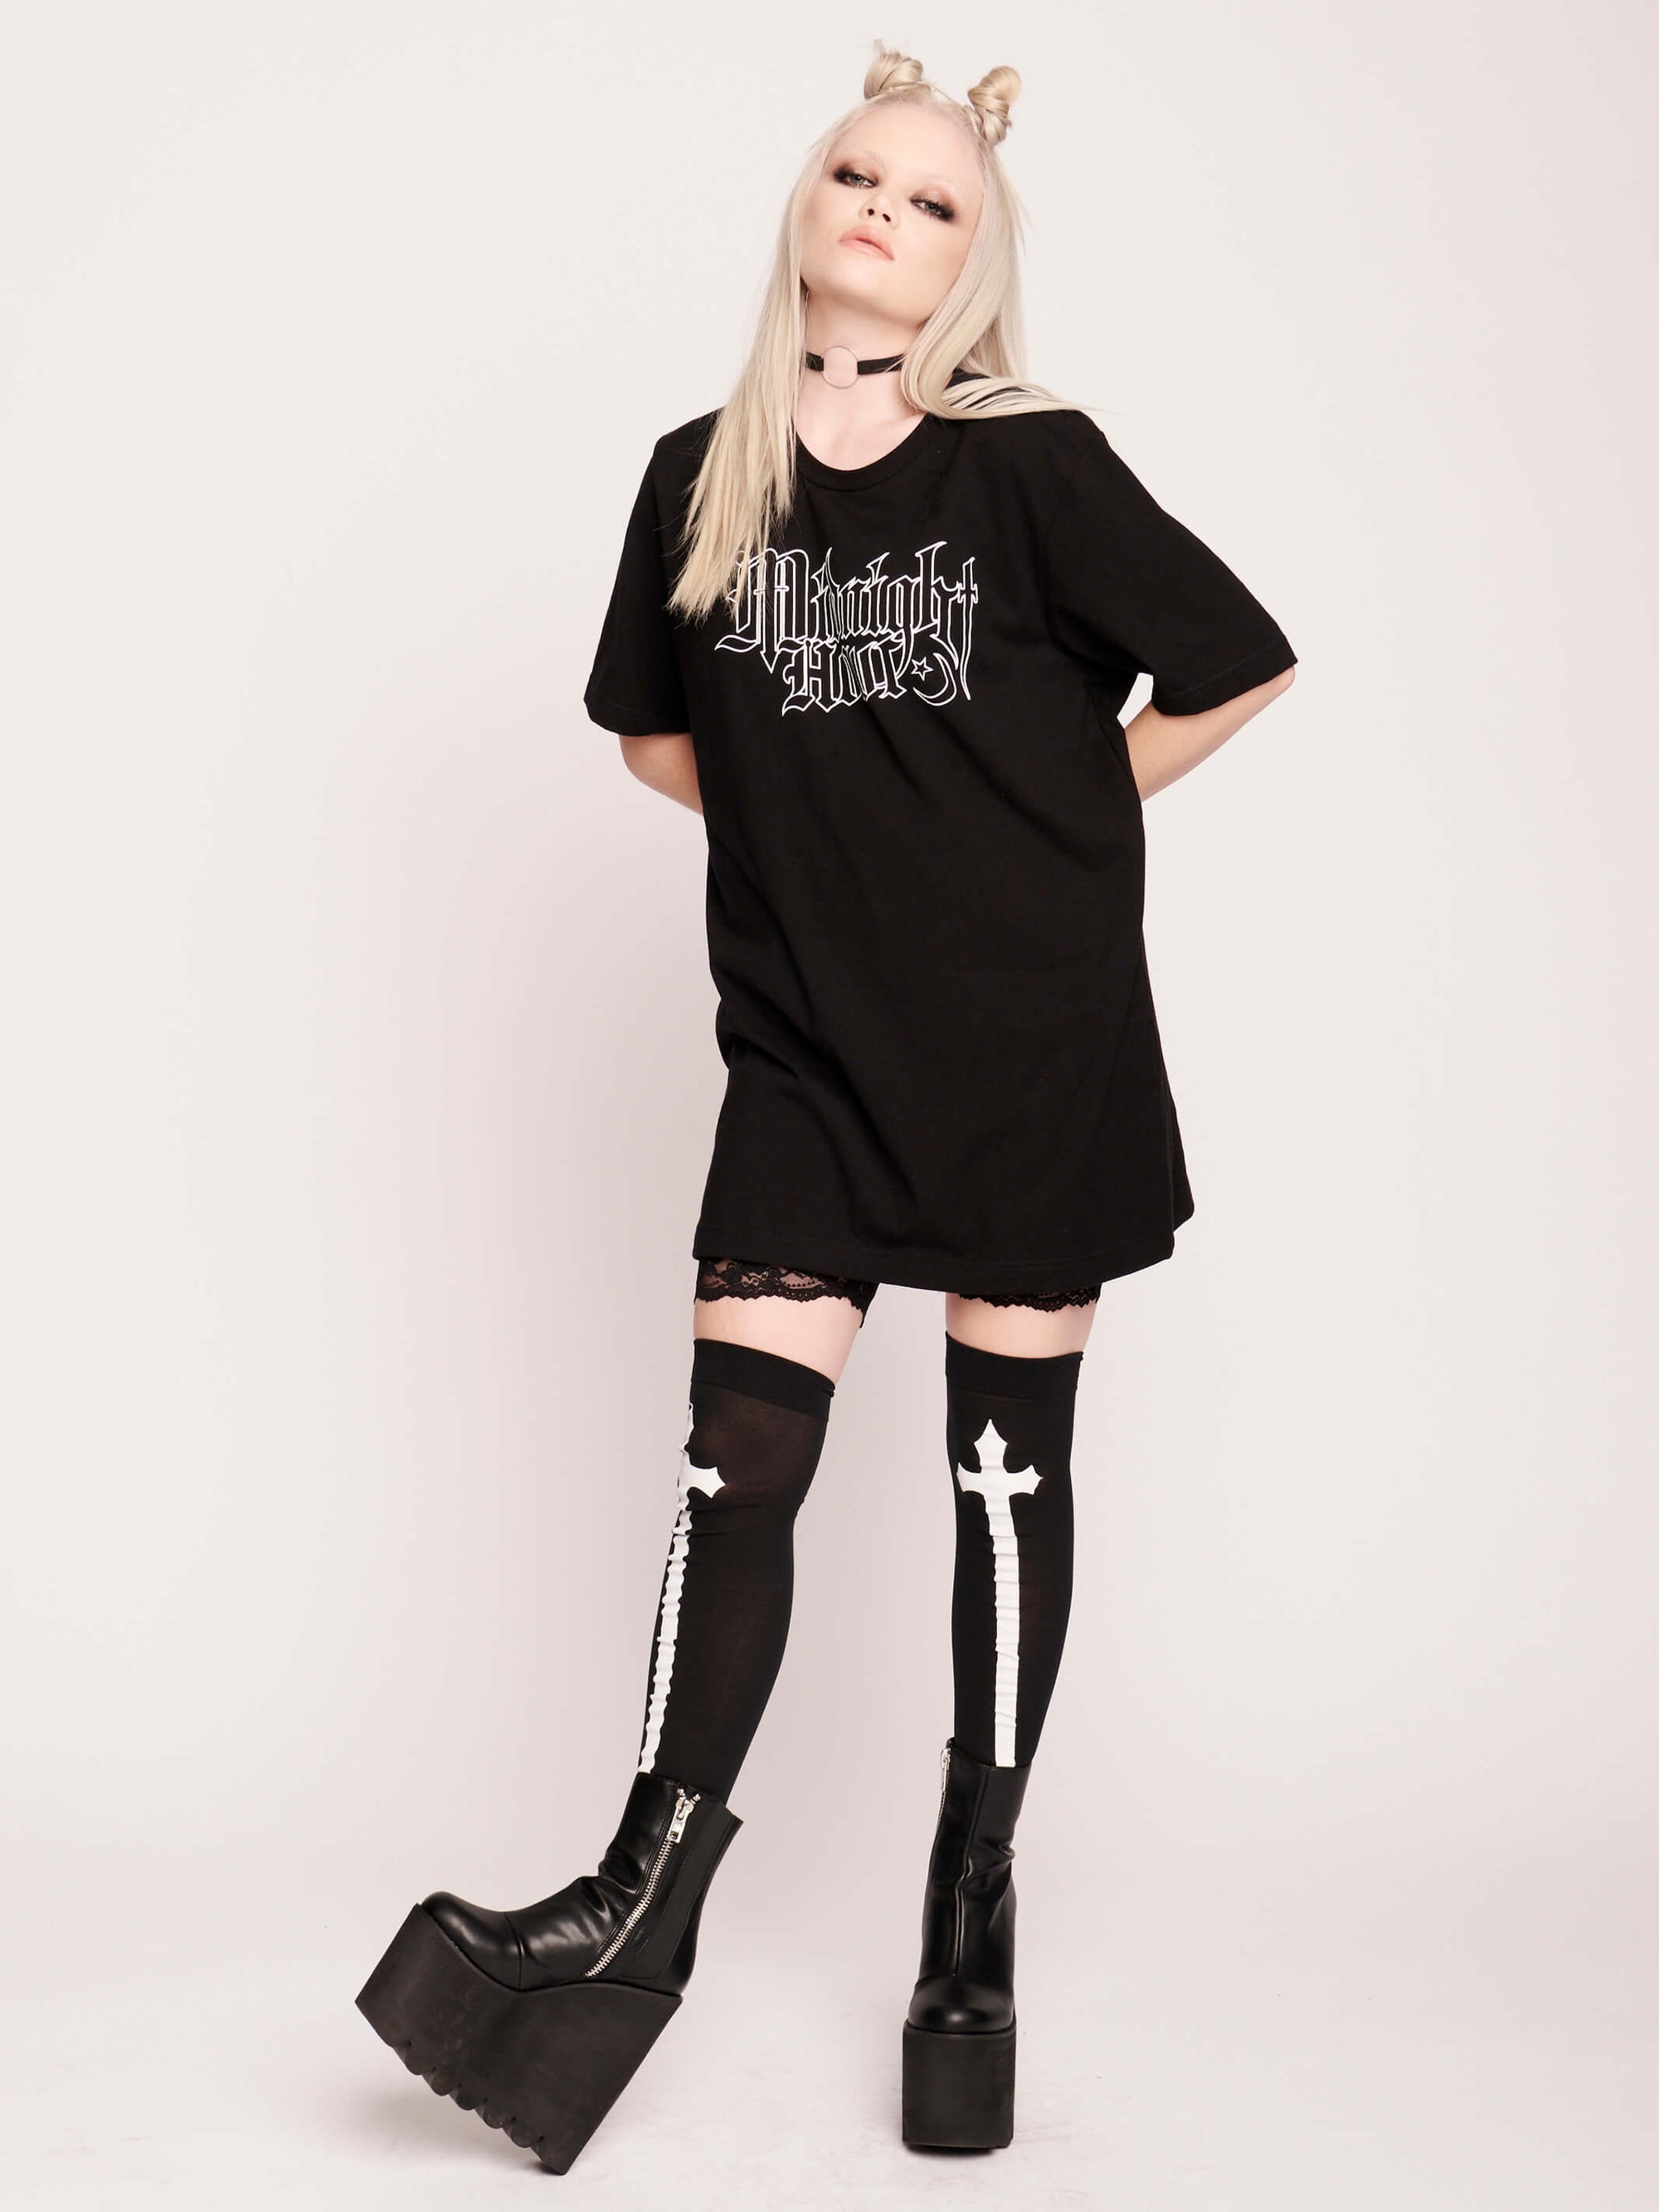 Midnight Hour Unisex Logo T-Shirt. goth fashion, goth rock clothing, gothic top, emo clothing, alternative fashion, dark aesthetic fashion